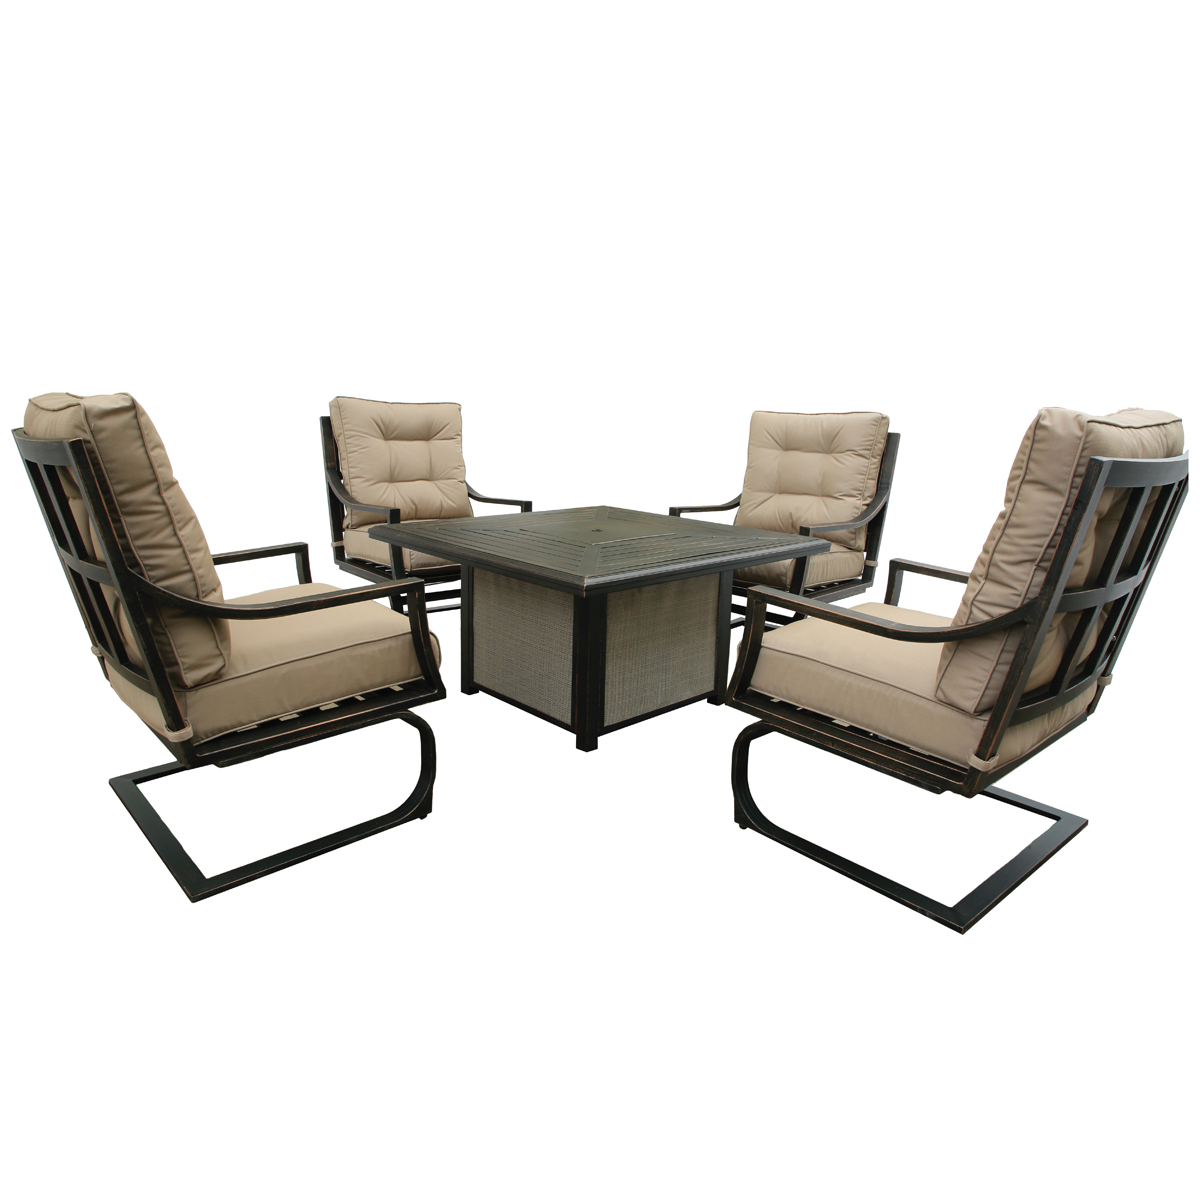 MS42003 Fairmont Fire Table Chat Set, Aluminum Top Table with Textilene Side Panels, Beige